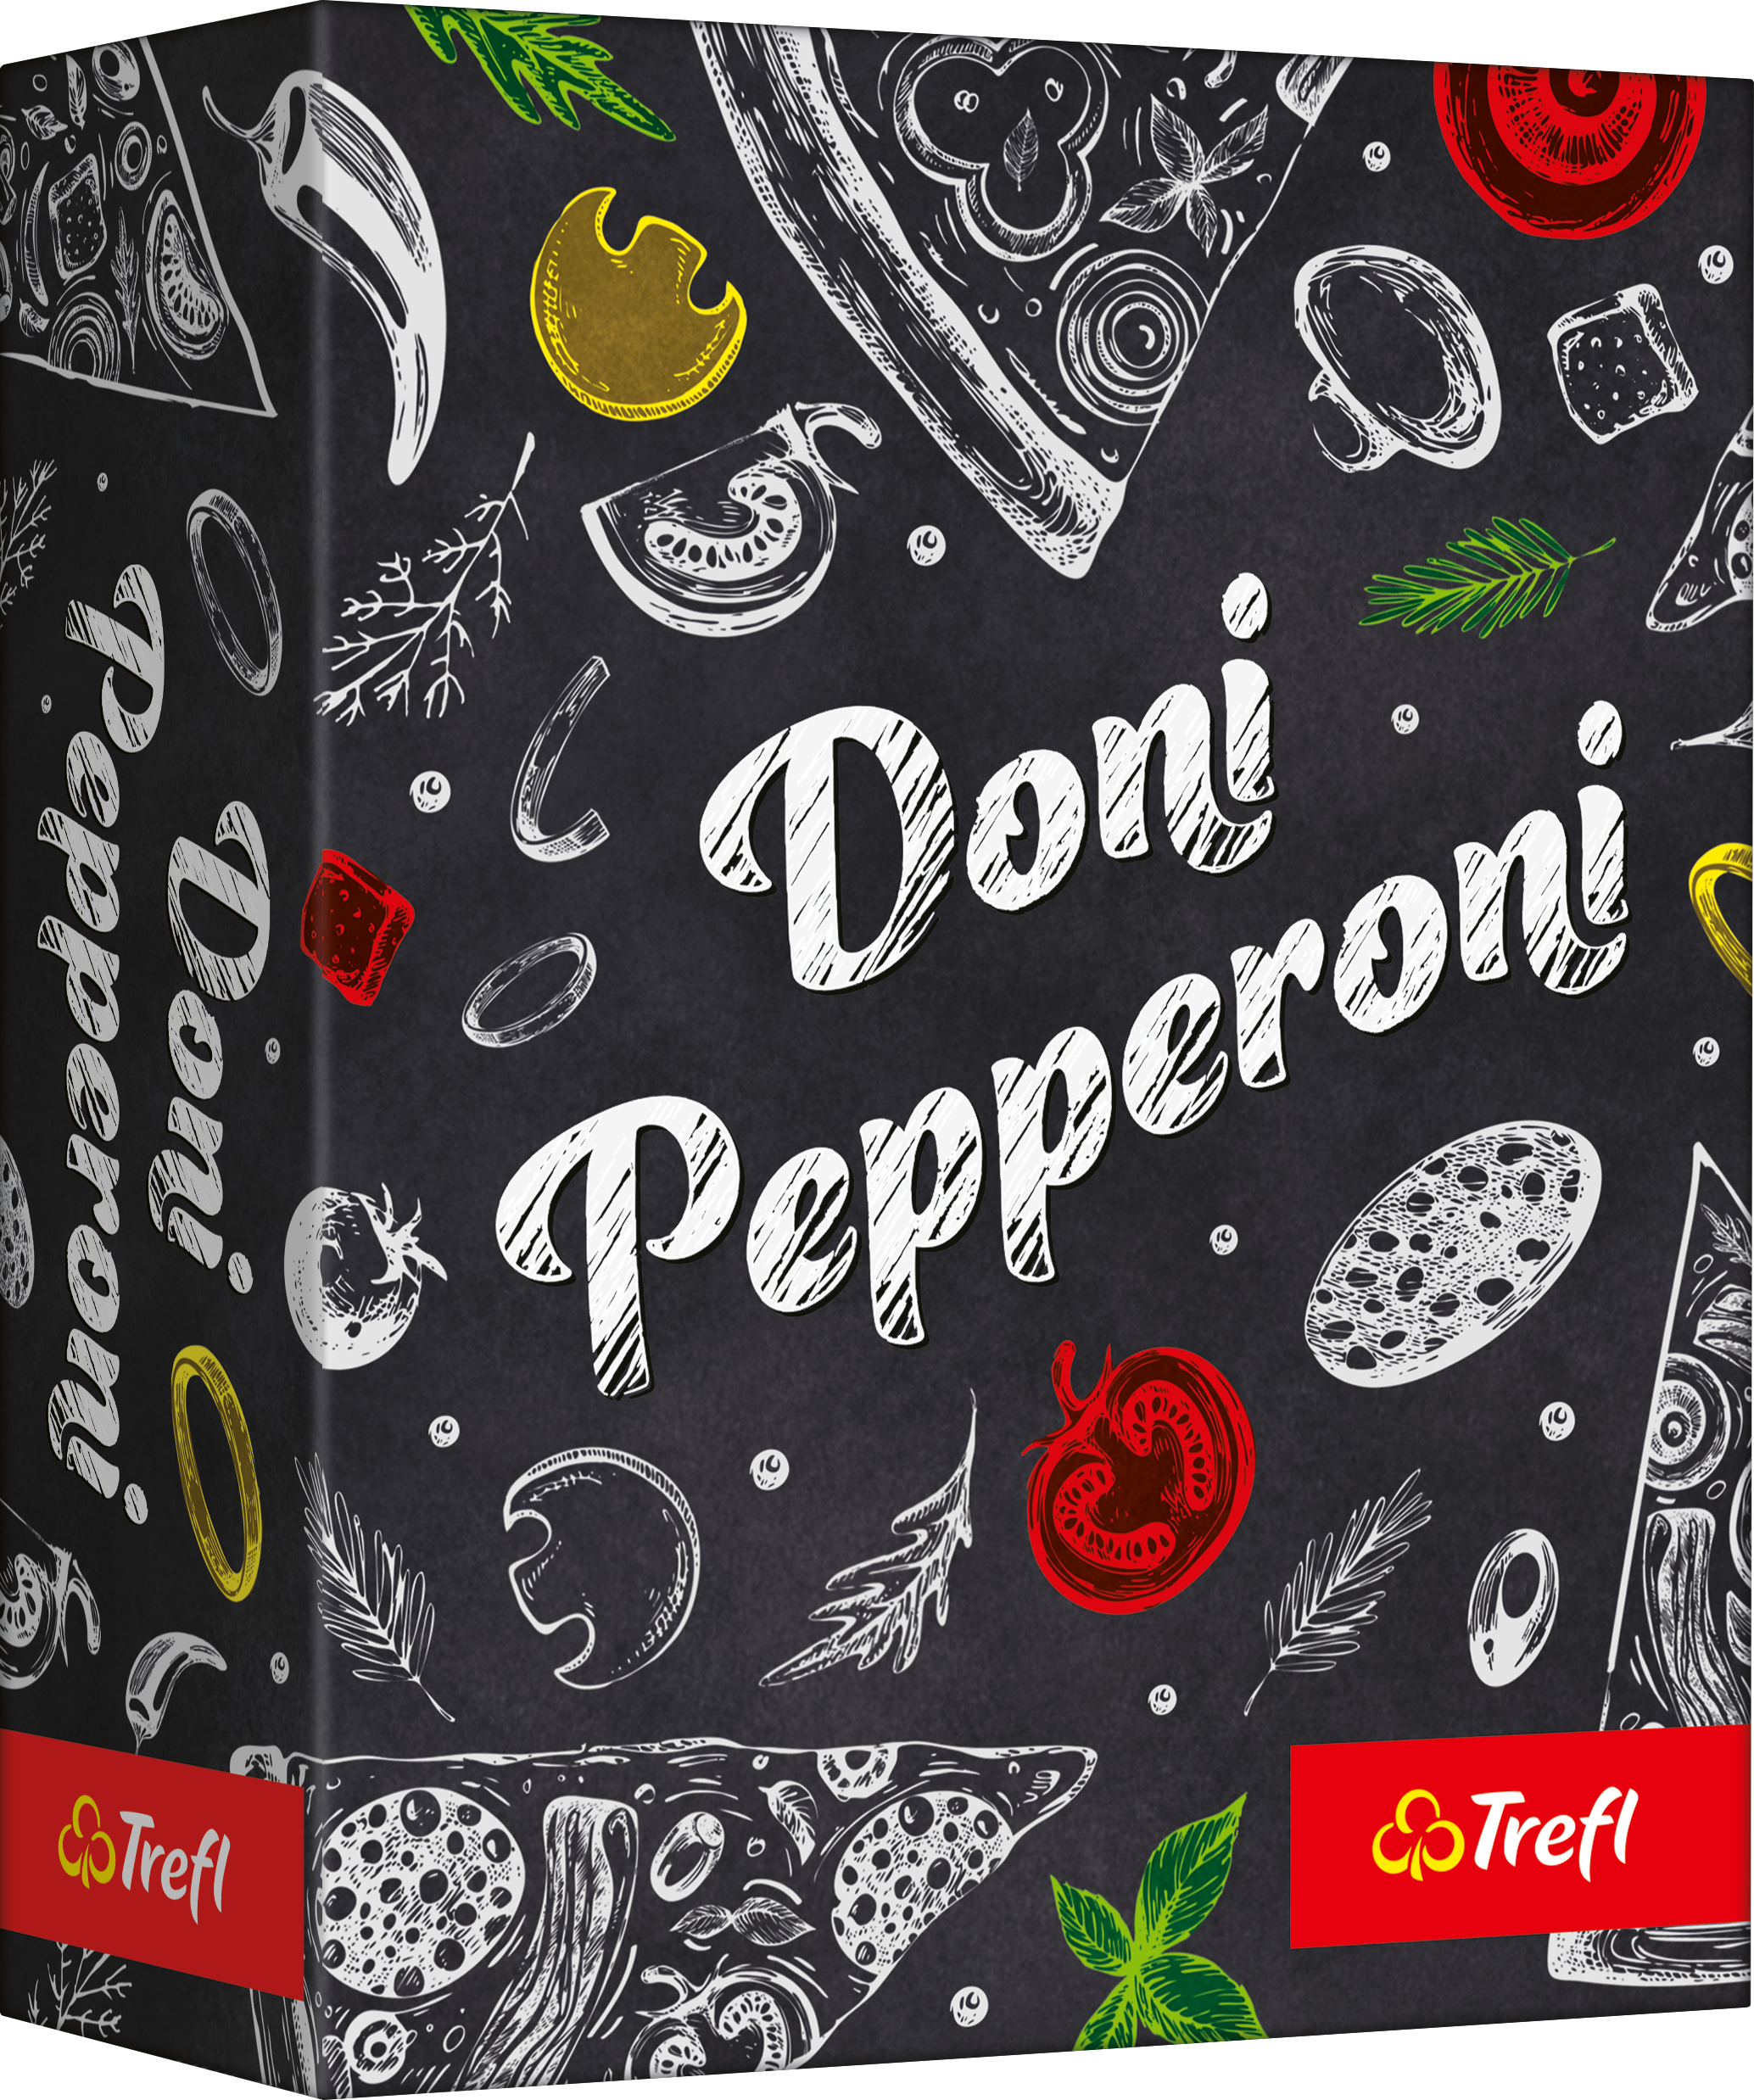 Trefl Games Doni Pepperoni